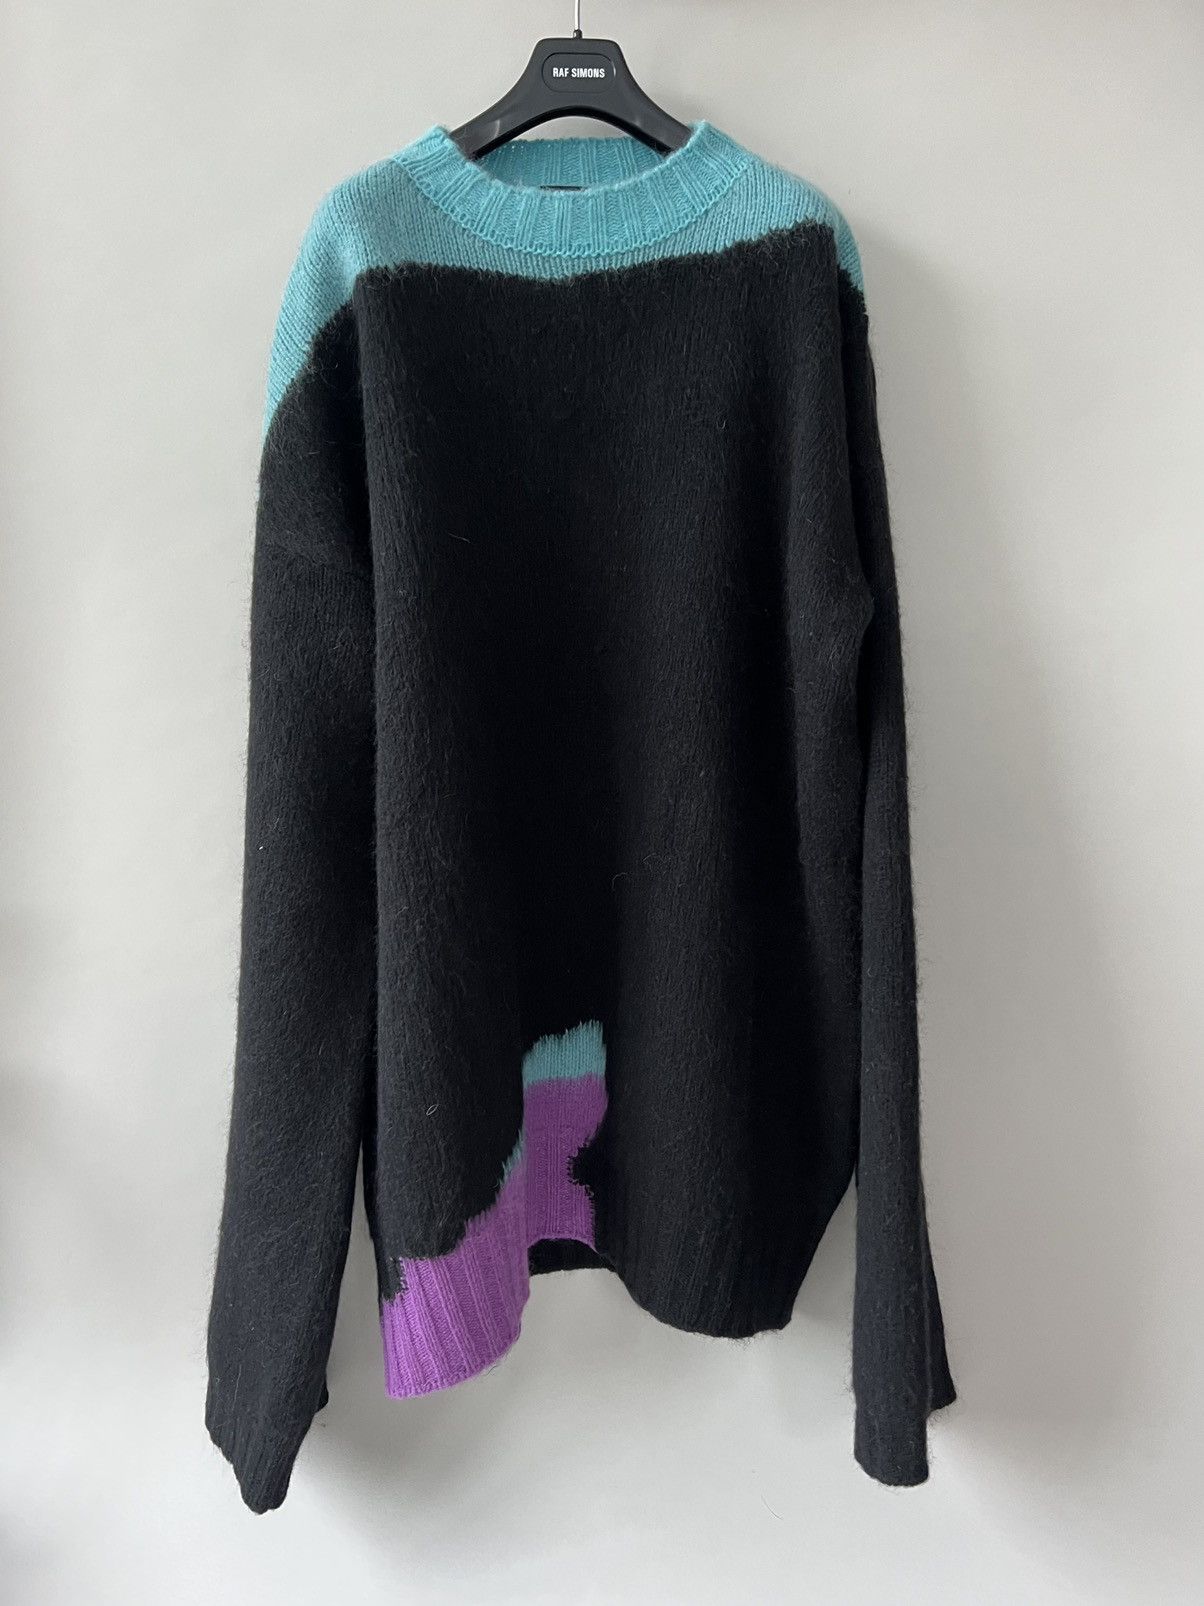 Raf Simons Oversized Boiled Knit Sweater | Grailed